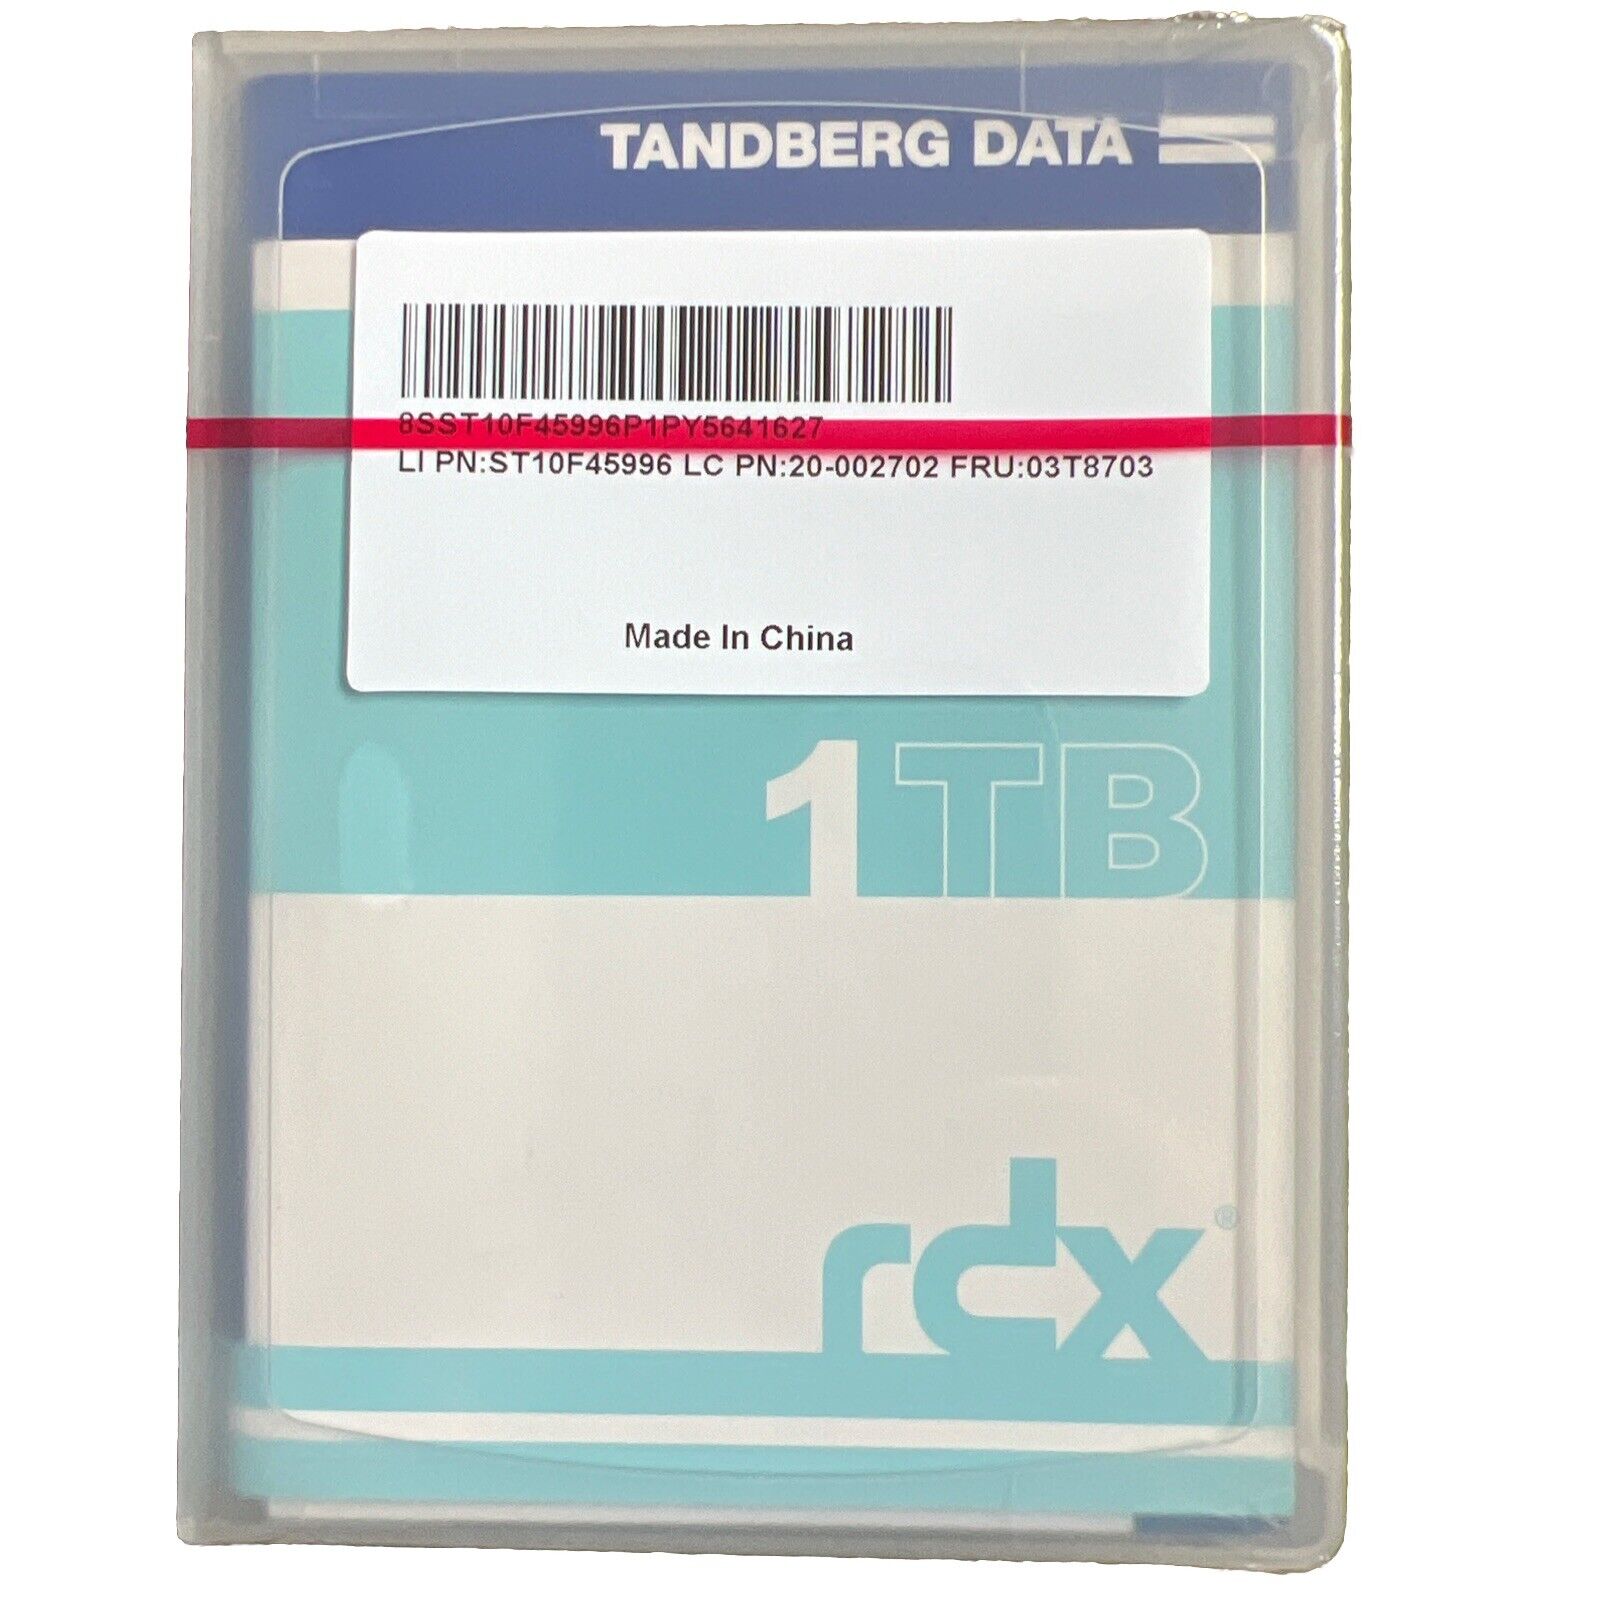 Tandberg 8586-RDX - 1TB RDX Data Cartridge